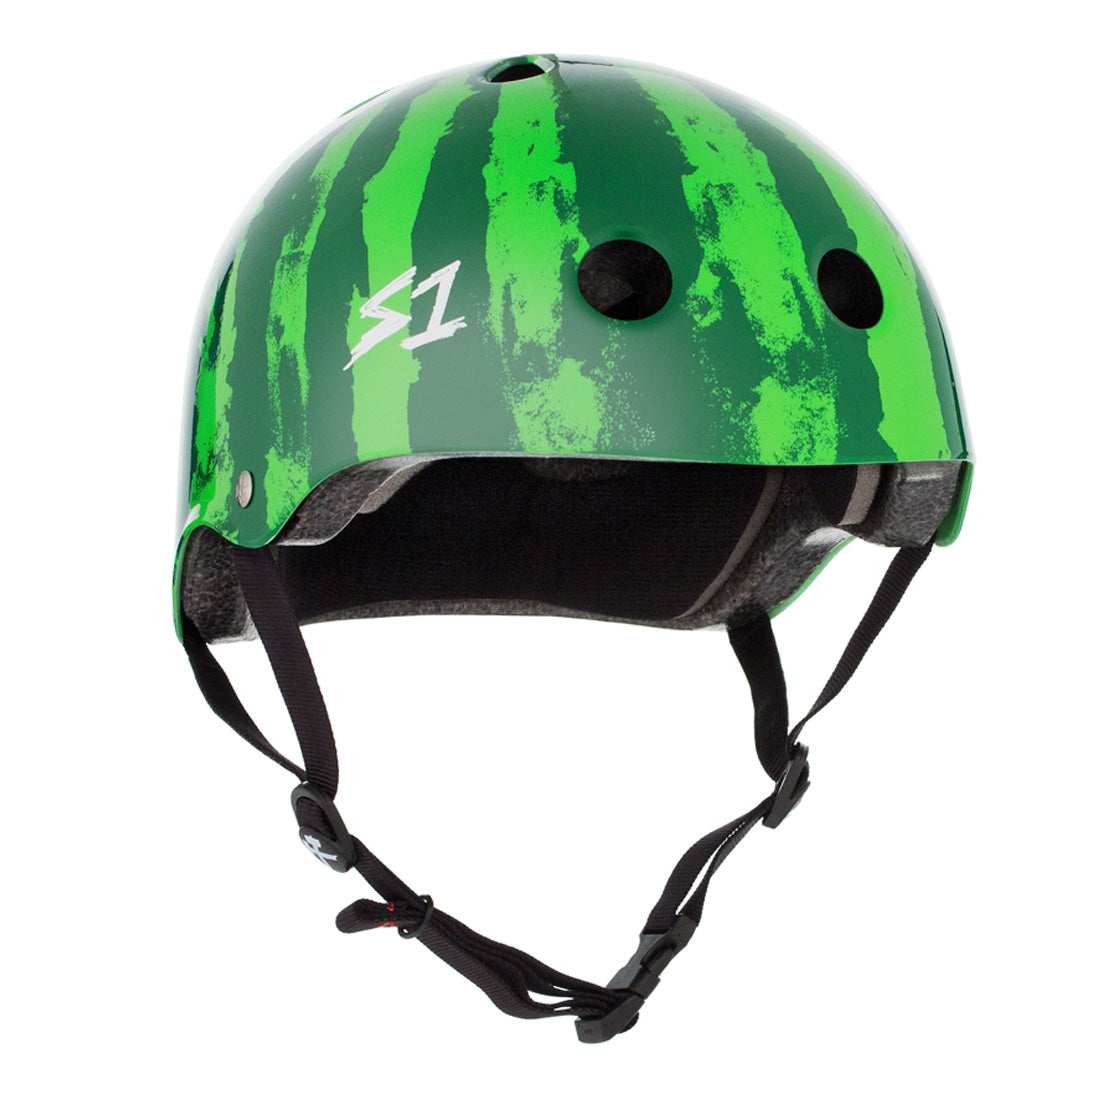 S-One Lifer Helmet - Watermelon Helmets